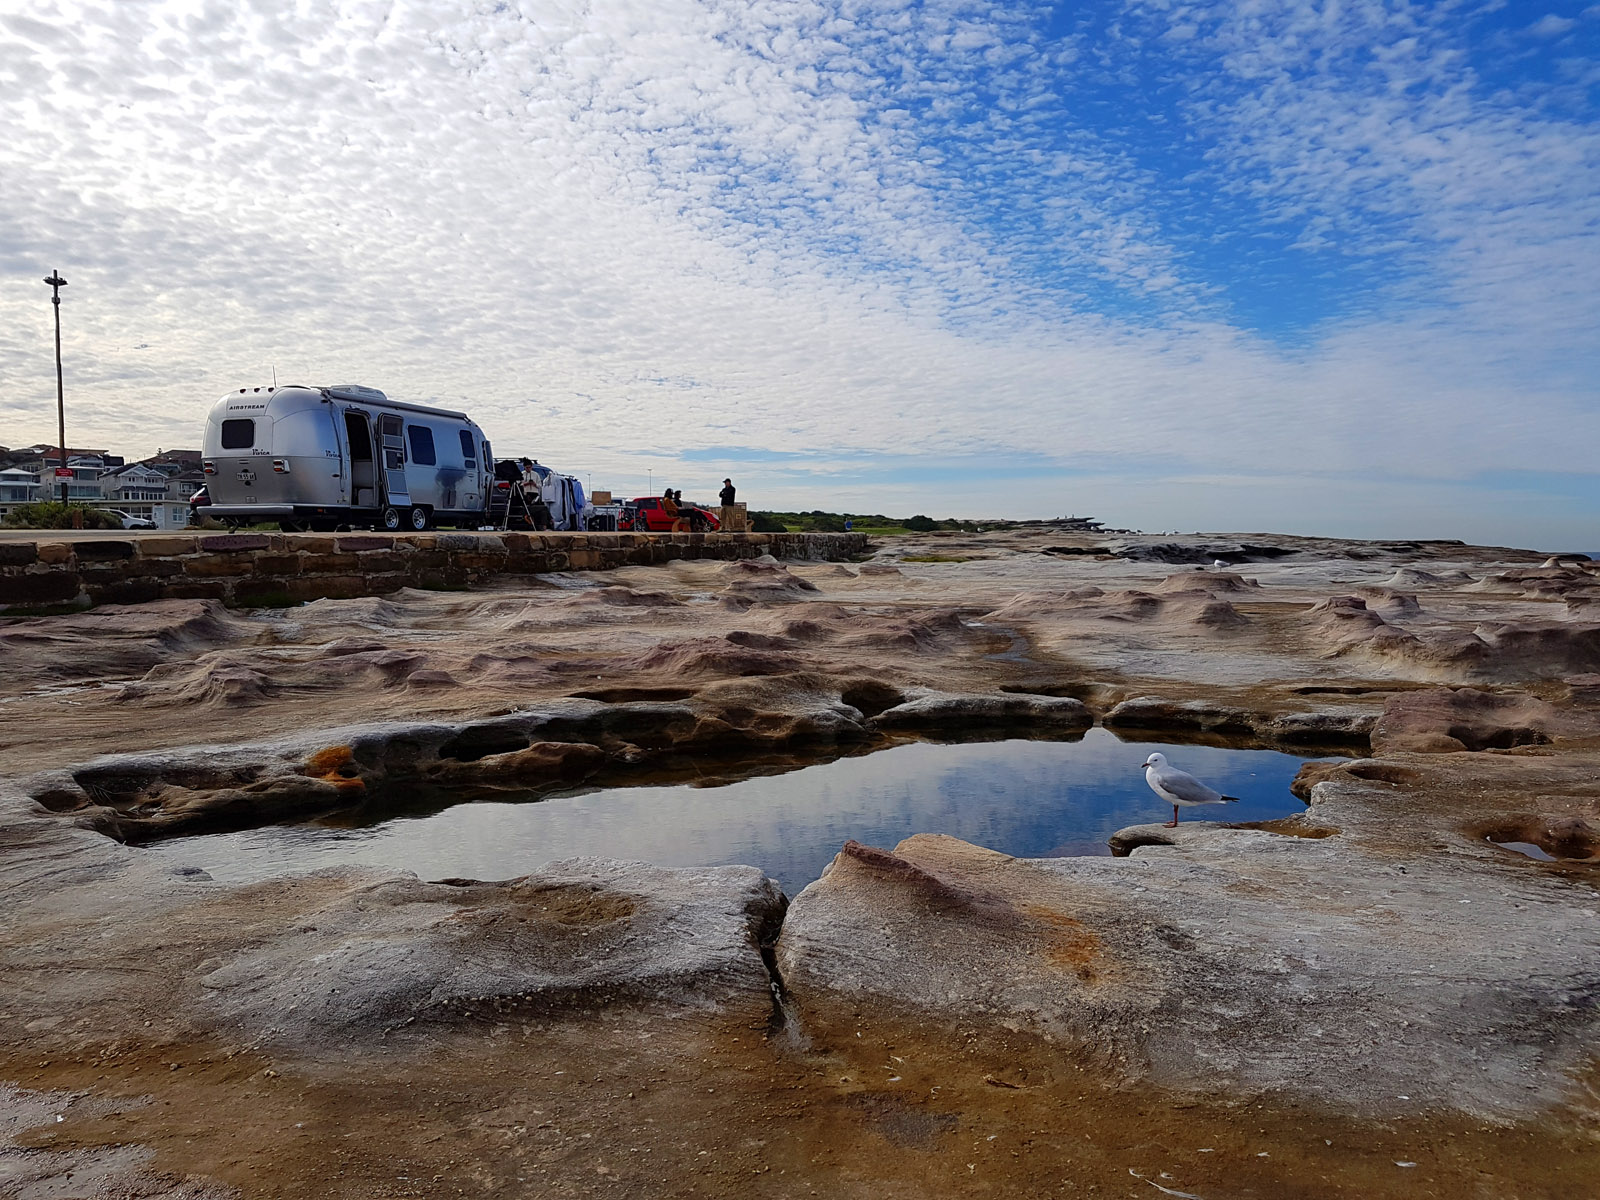 SGMT Australia Sydney_Bondi to Coogee Coastal Walk_15 Clovelly Beach Car Park Clouds and Birds